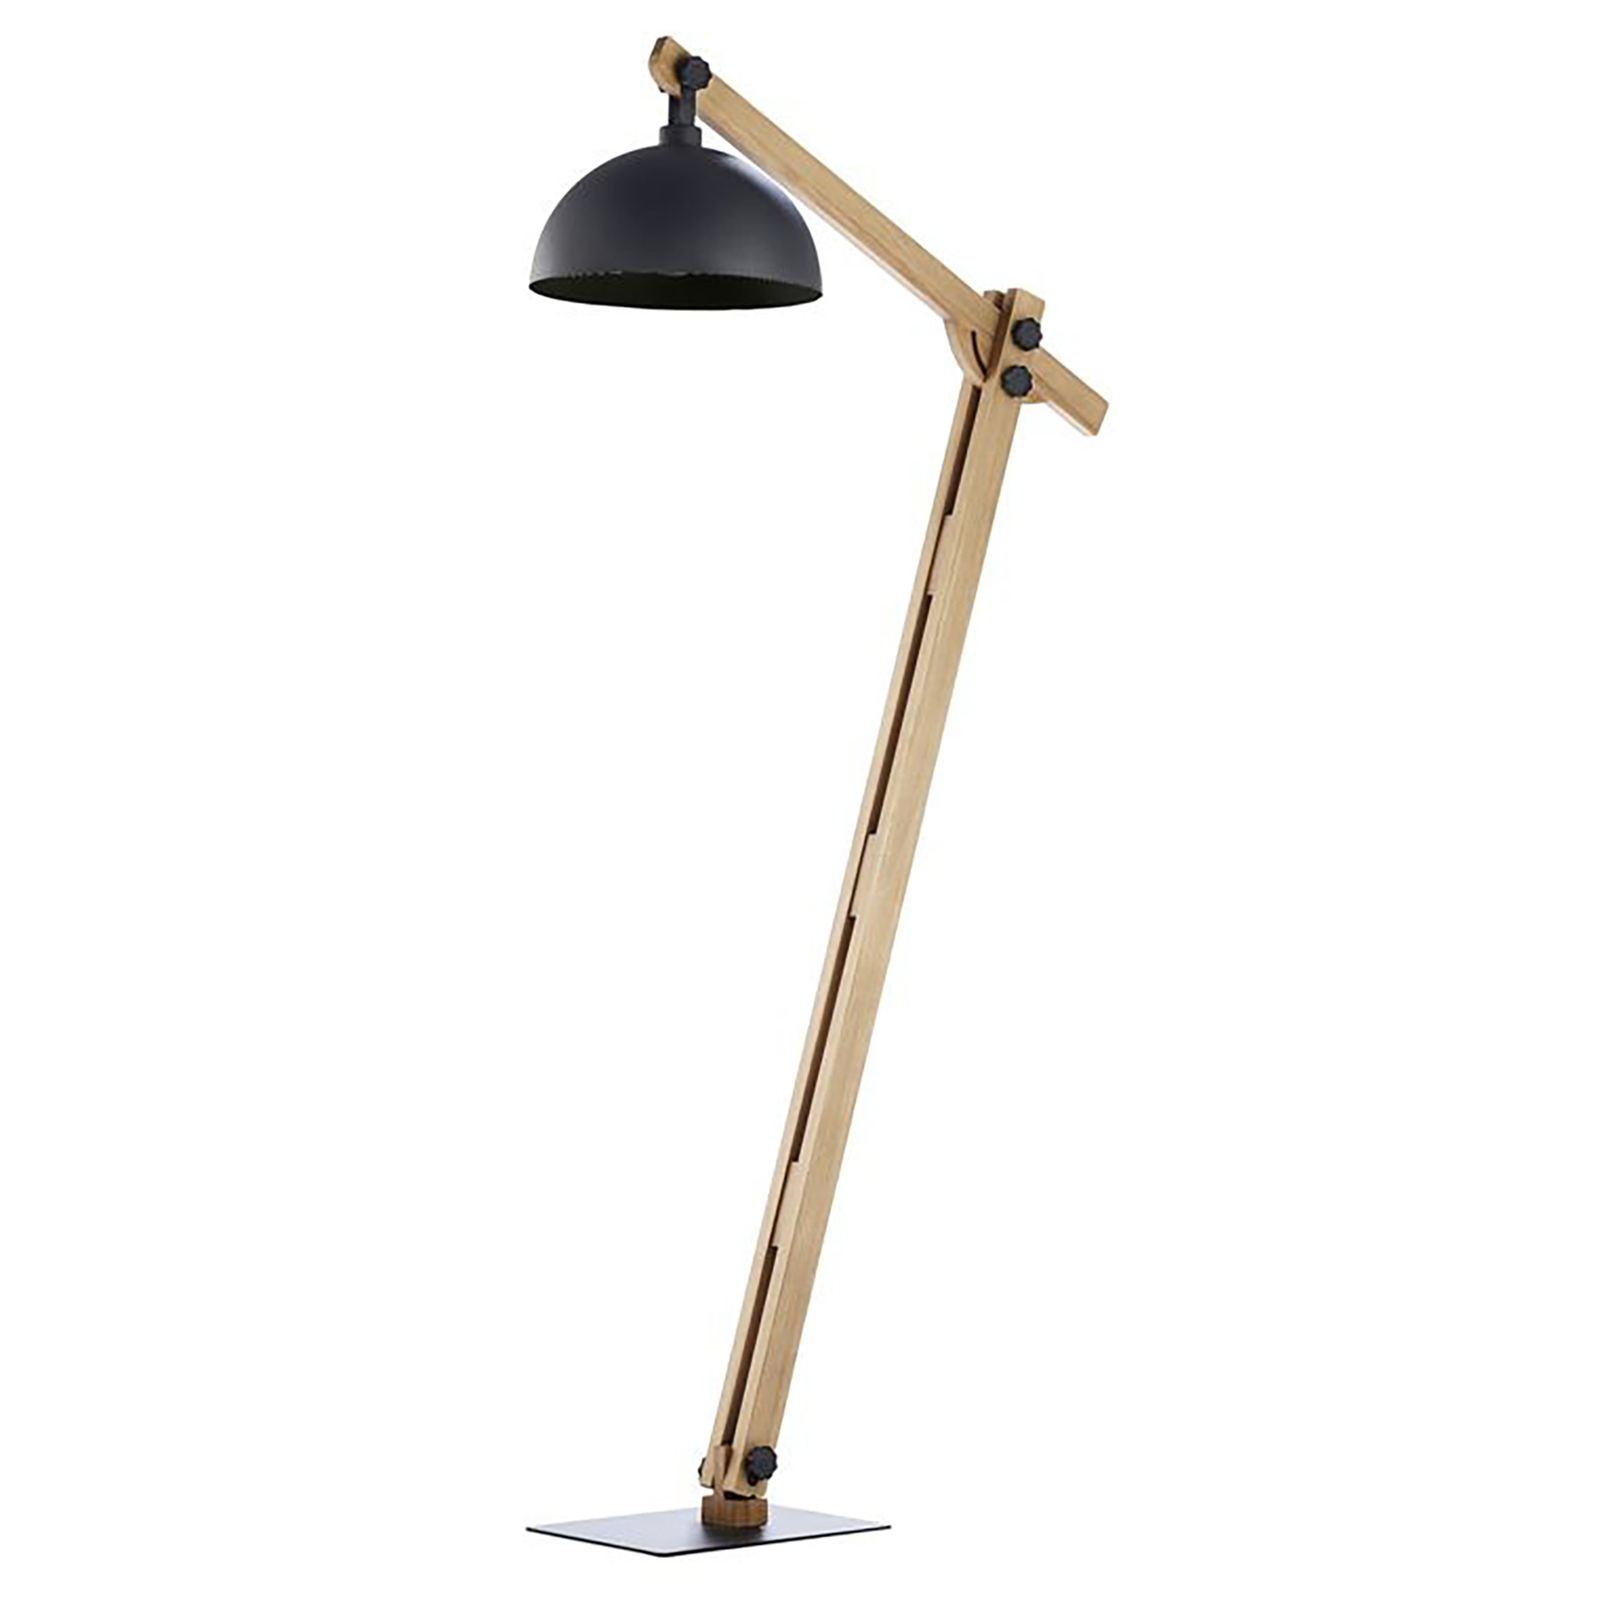 Envostar Stort floor lamp with a wooden frame